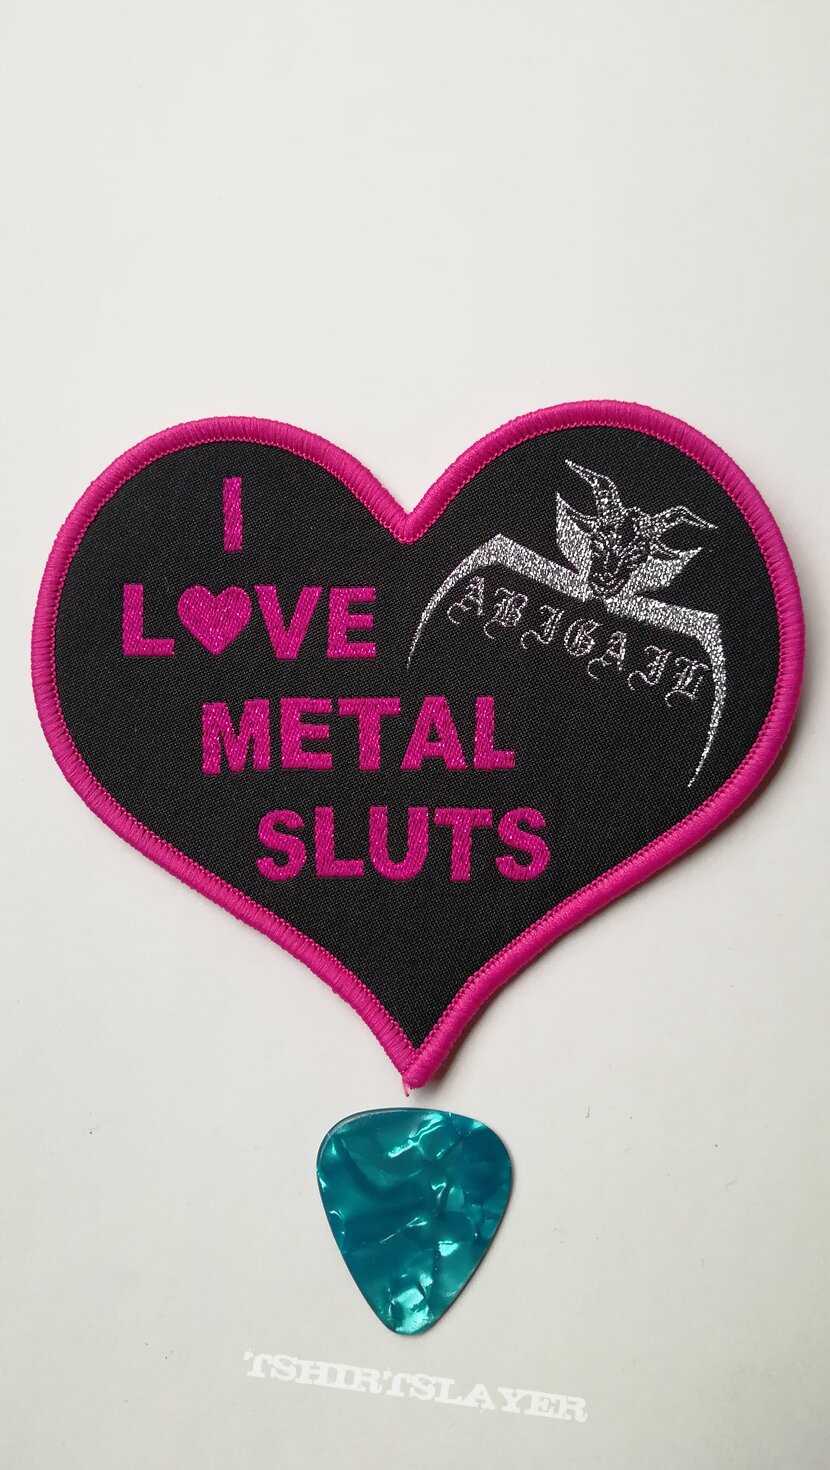 Abigail - I Love Metal Sluts - Patch 